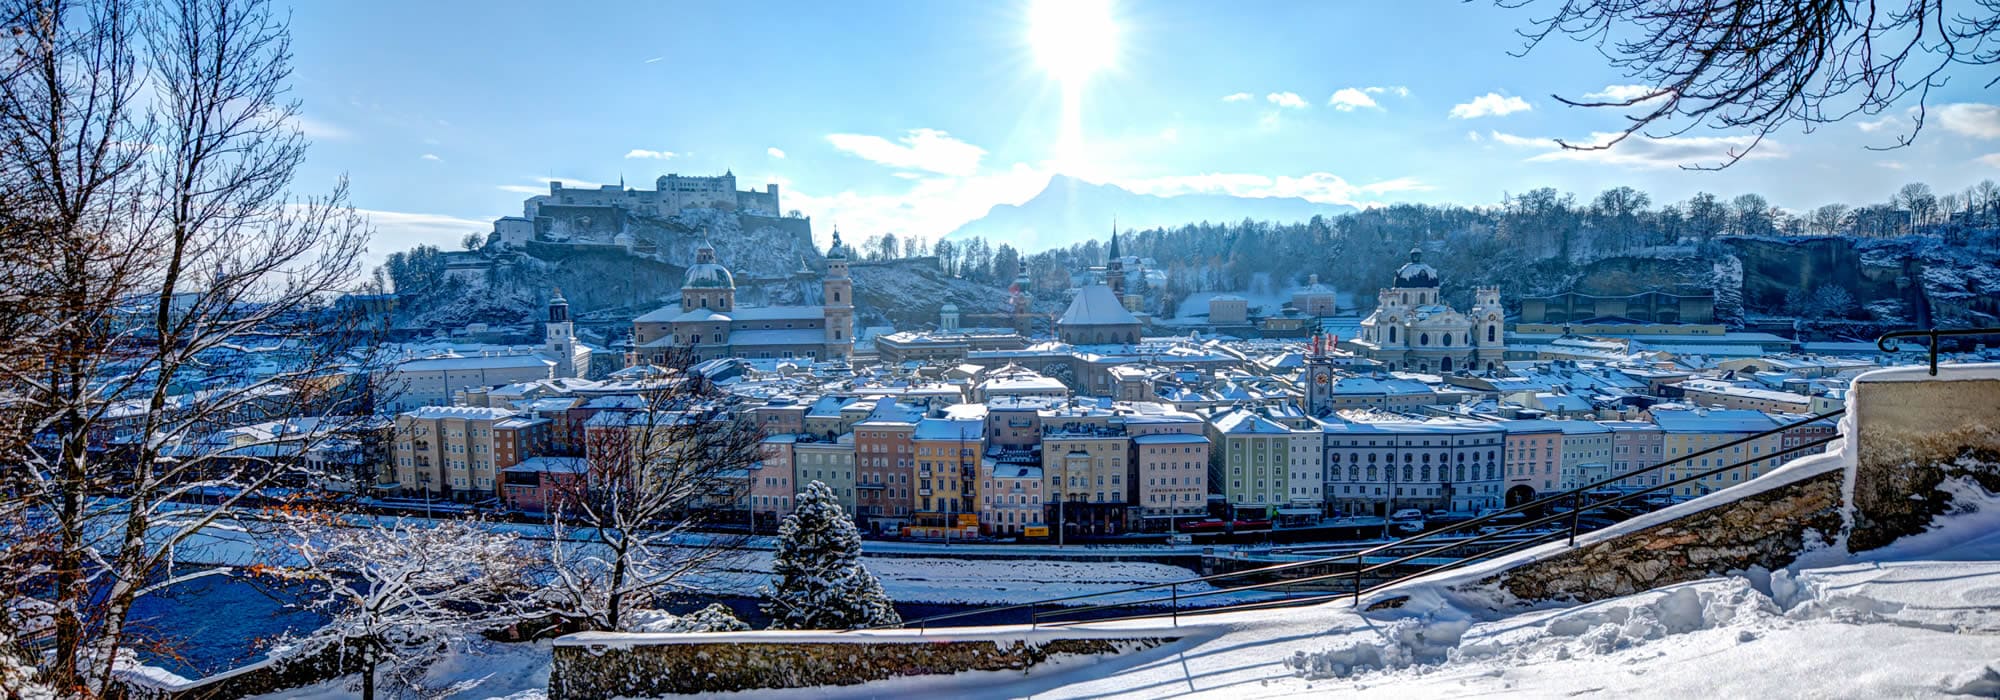 Festival city of Salzburg in winter